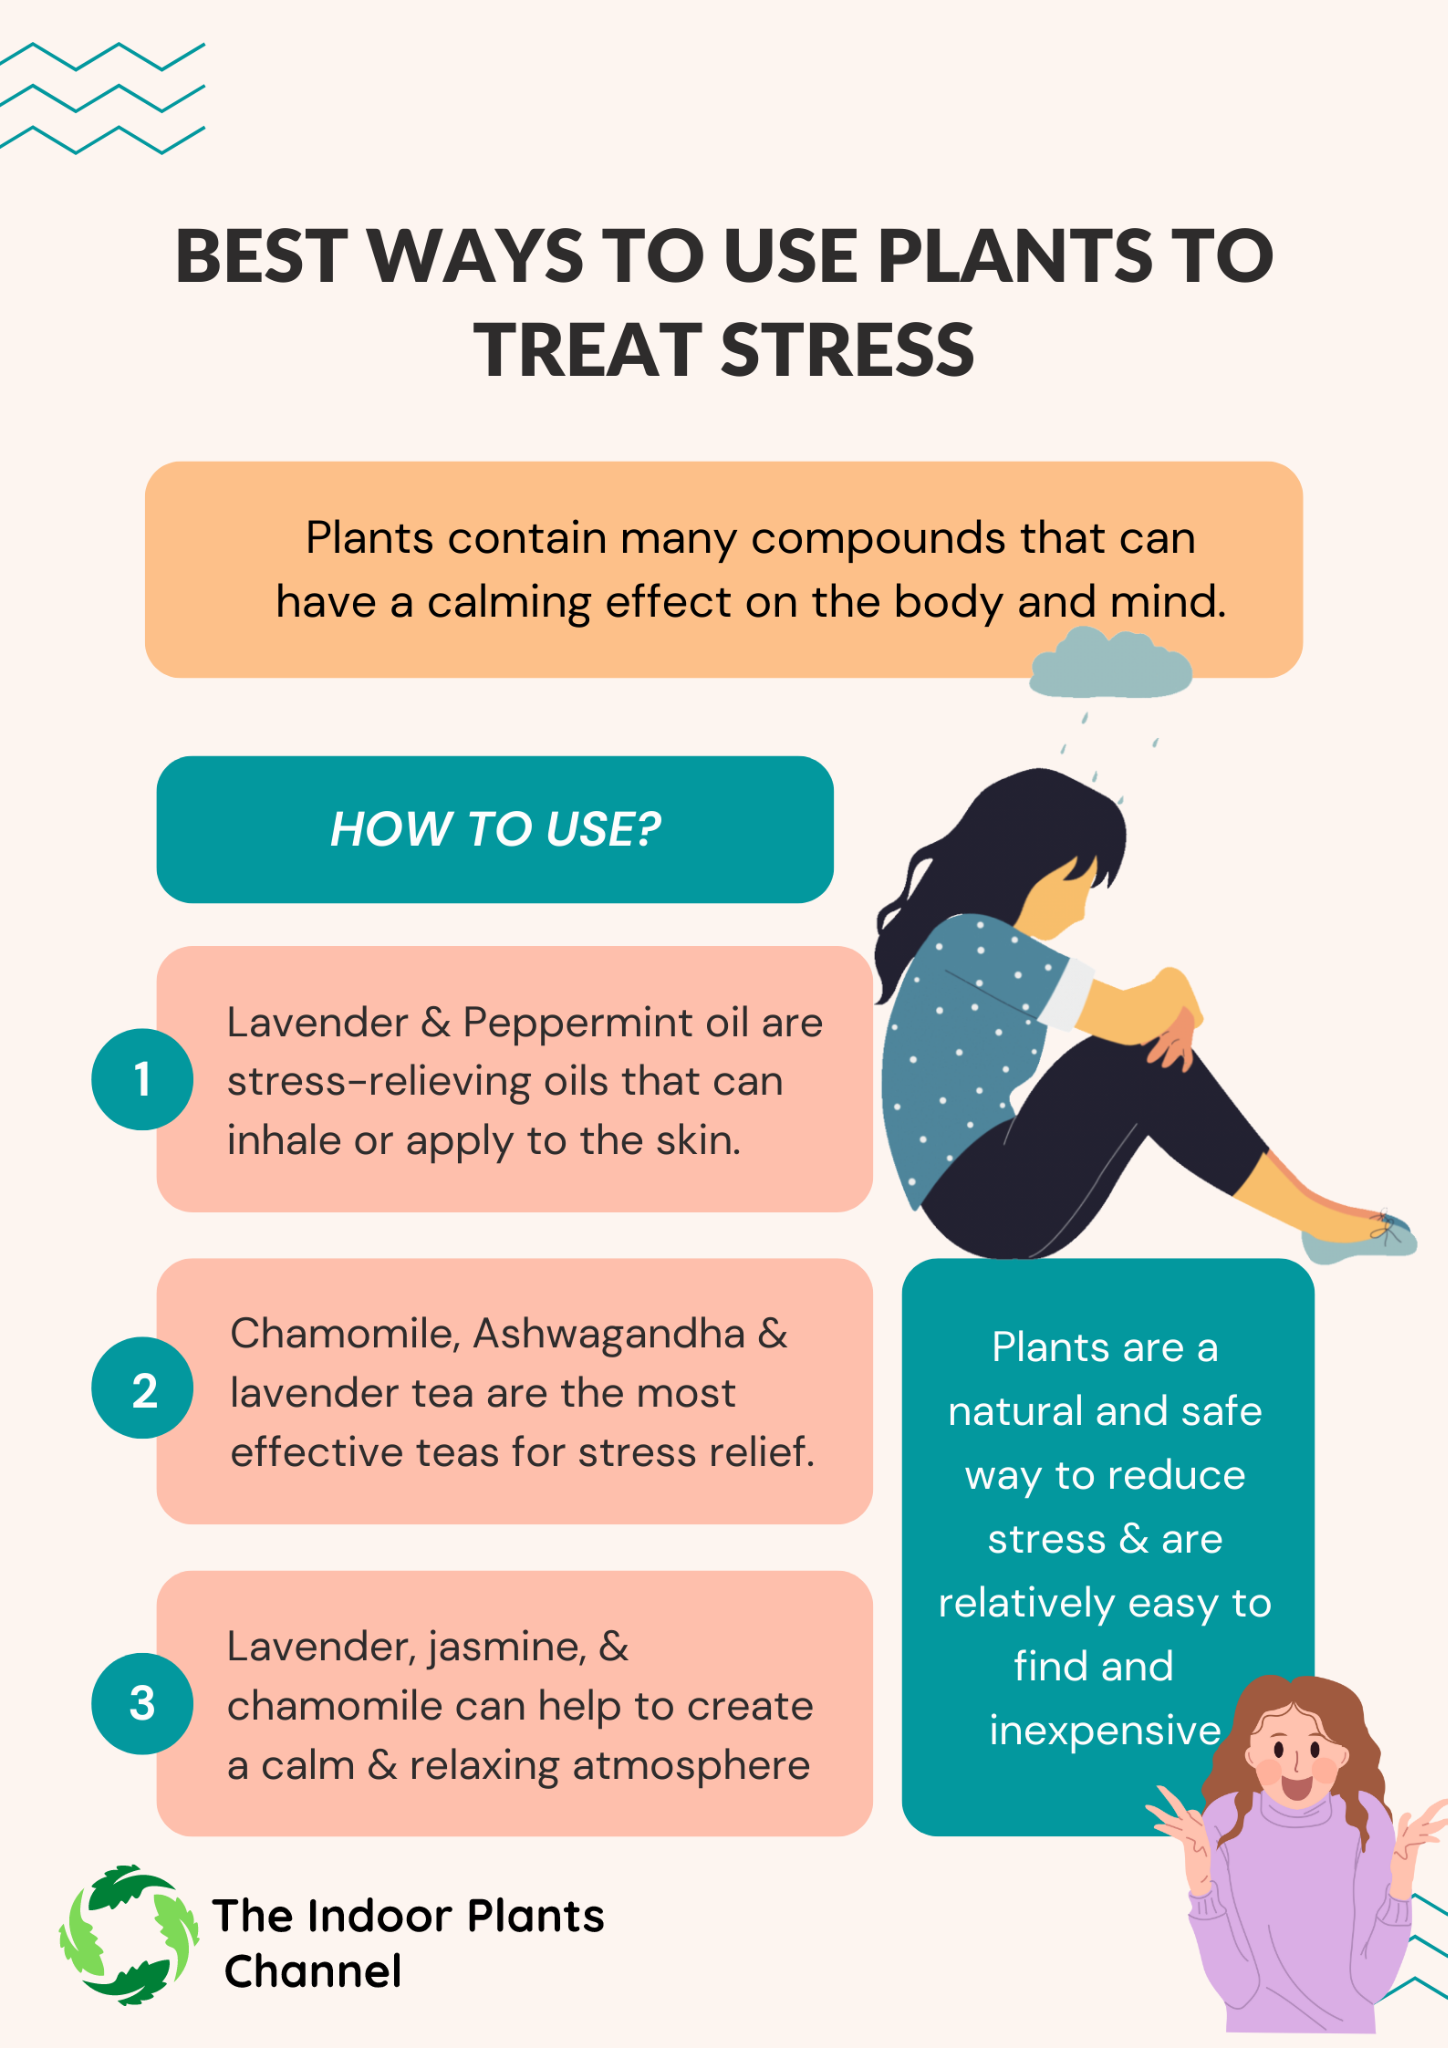 Best ways to use plants to treat stress